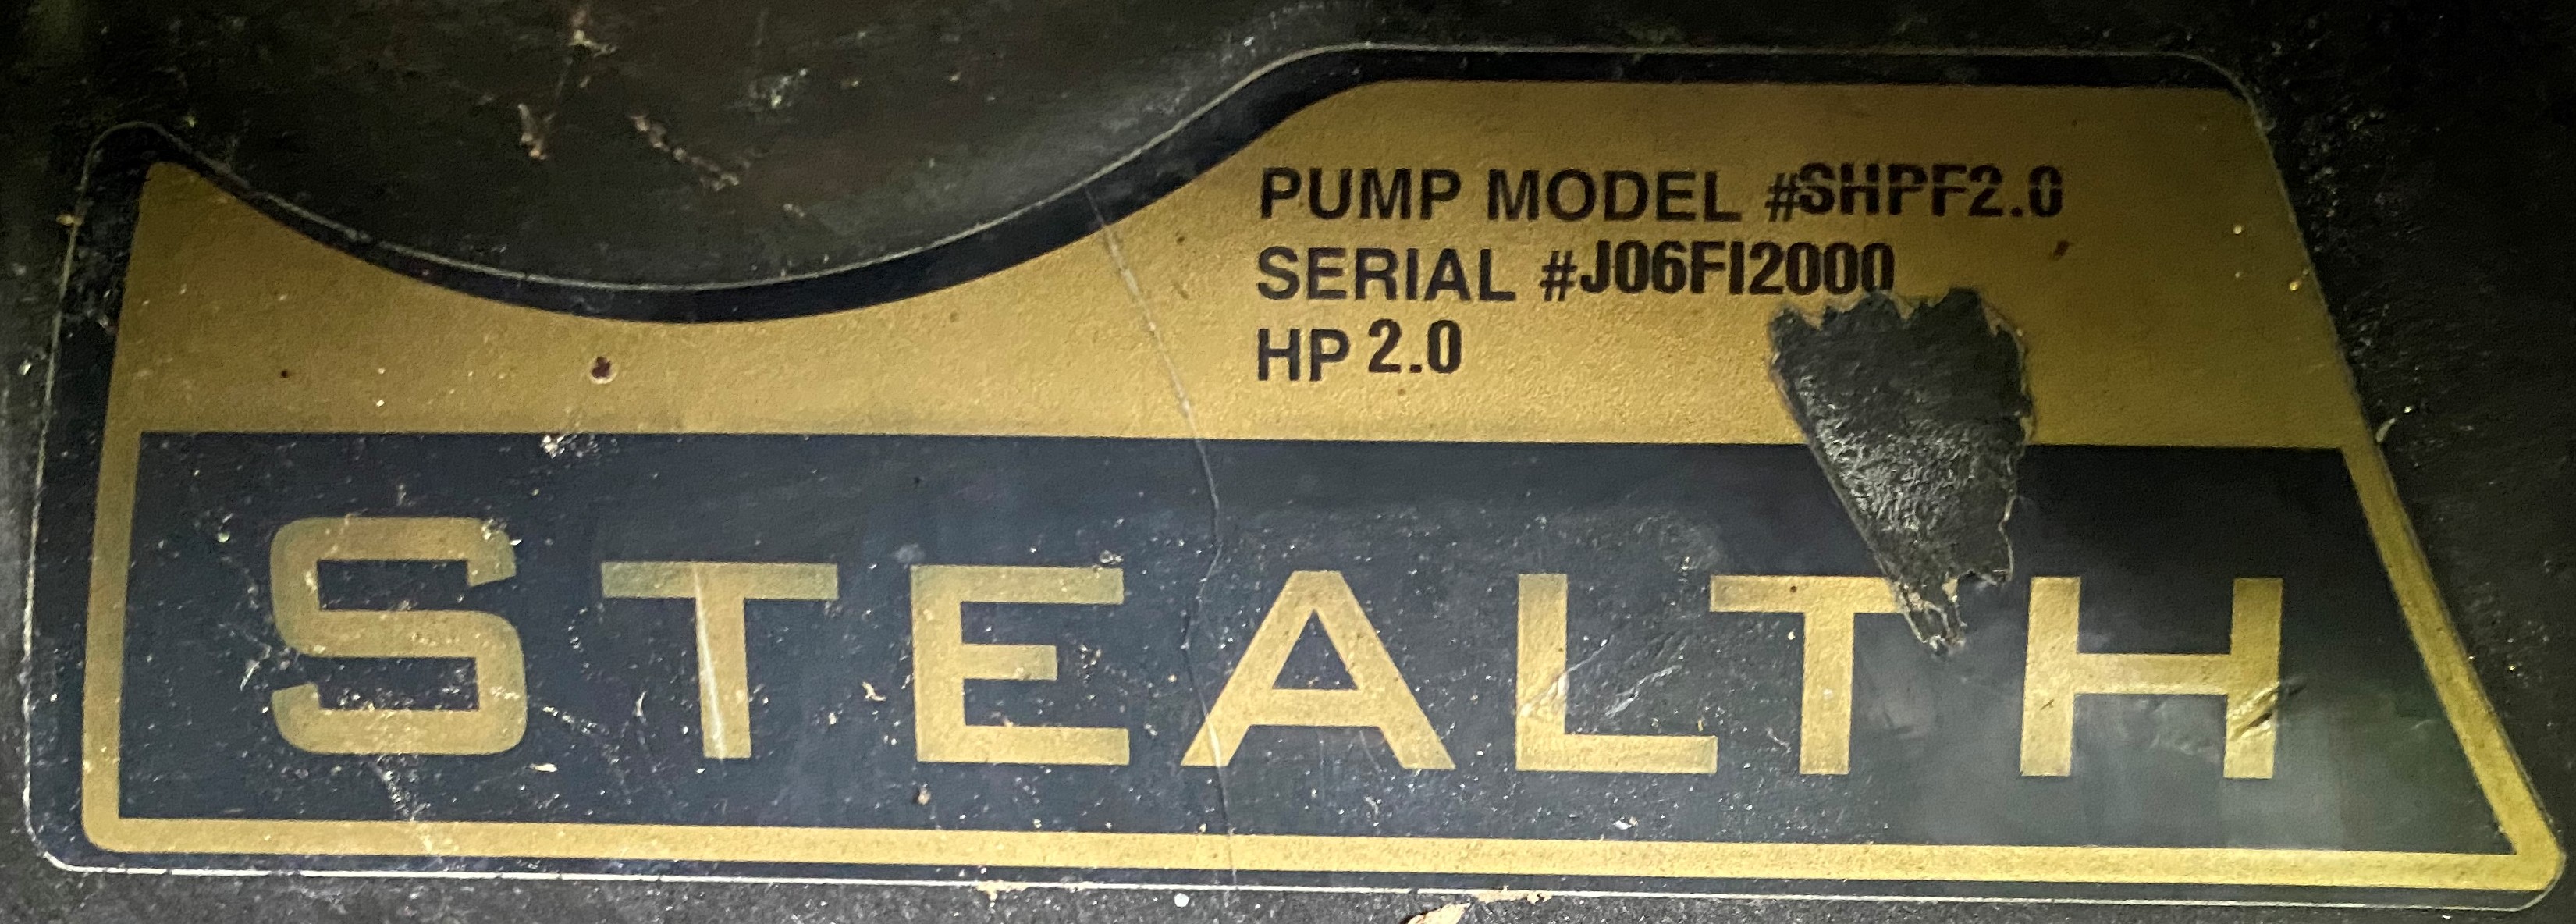 Pump Nameplate (Jandy SHPF2.0)